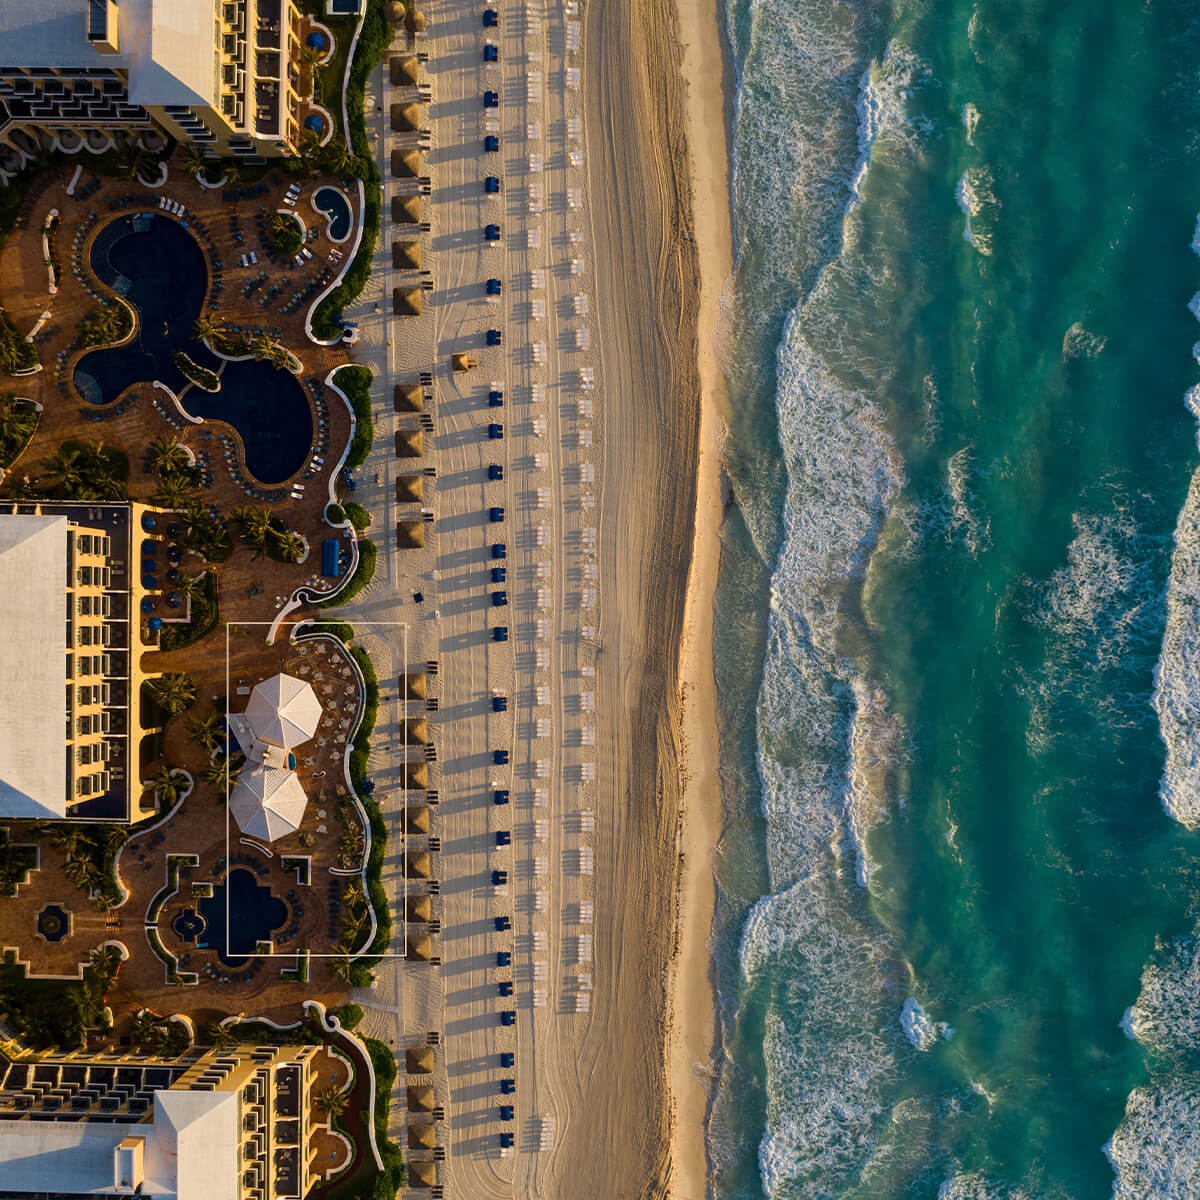 The Ritz Carlton Cancun